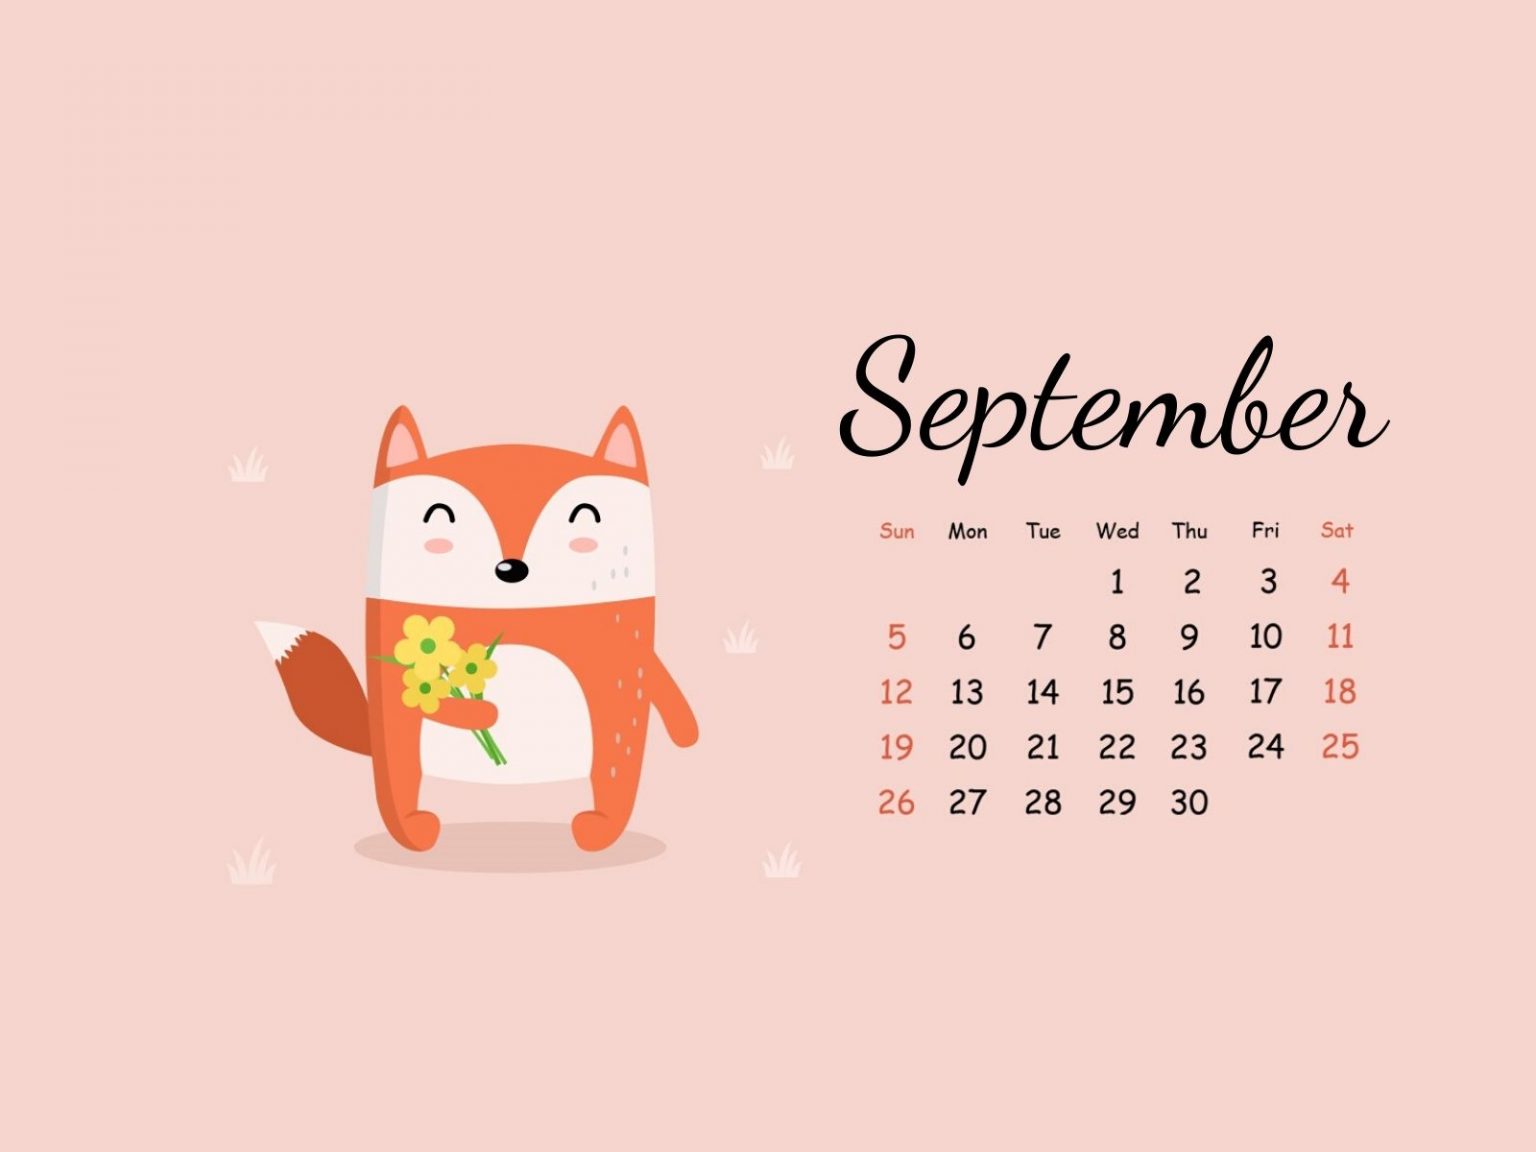 September 2021 Calendar Wallpaper